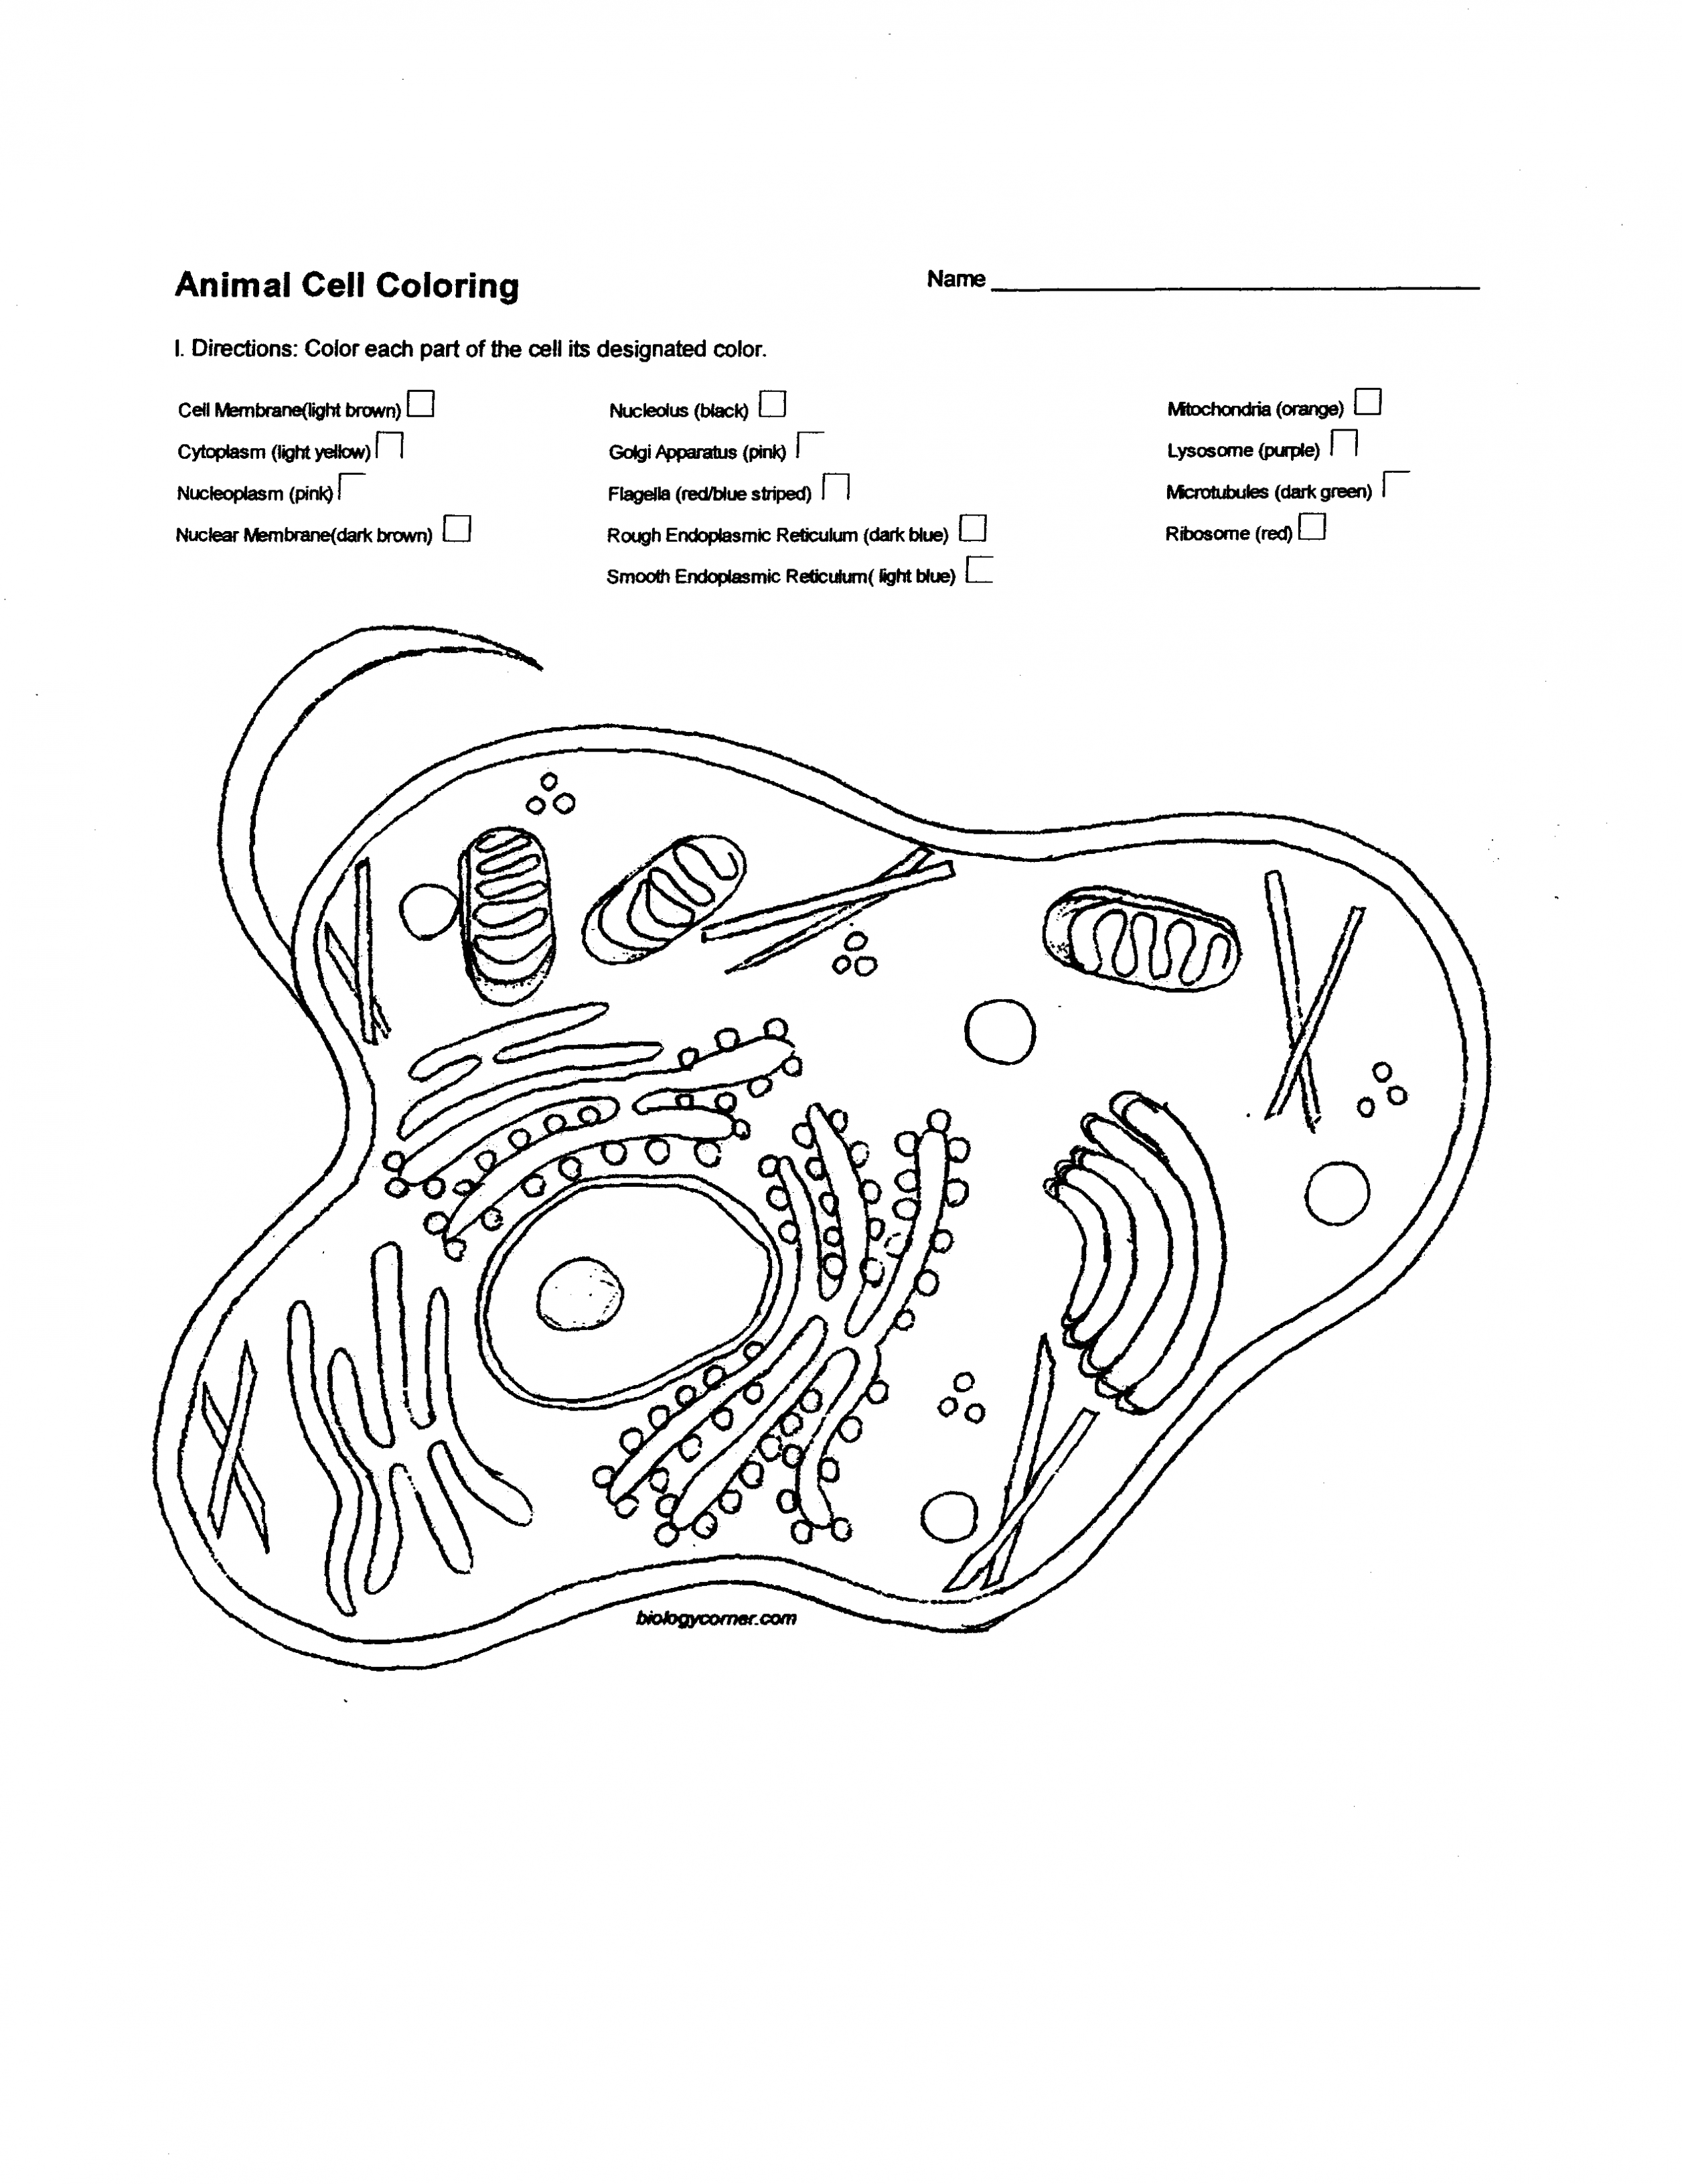 33 Draw And Label A Mitochondria - Labels Design Ideas 2020